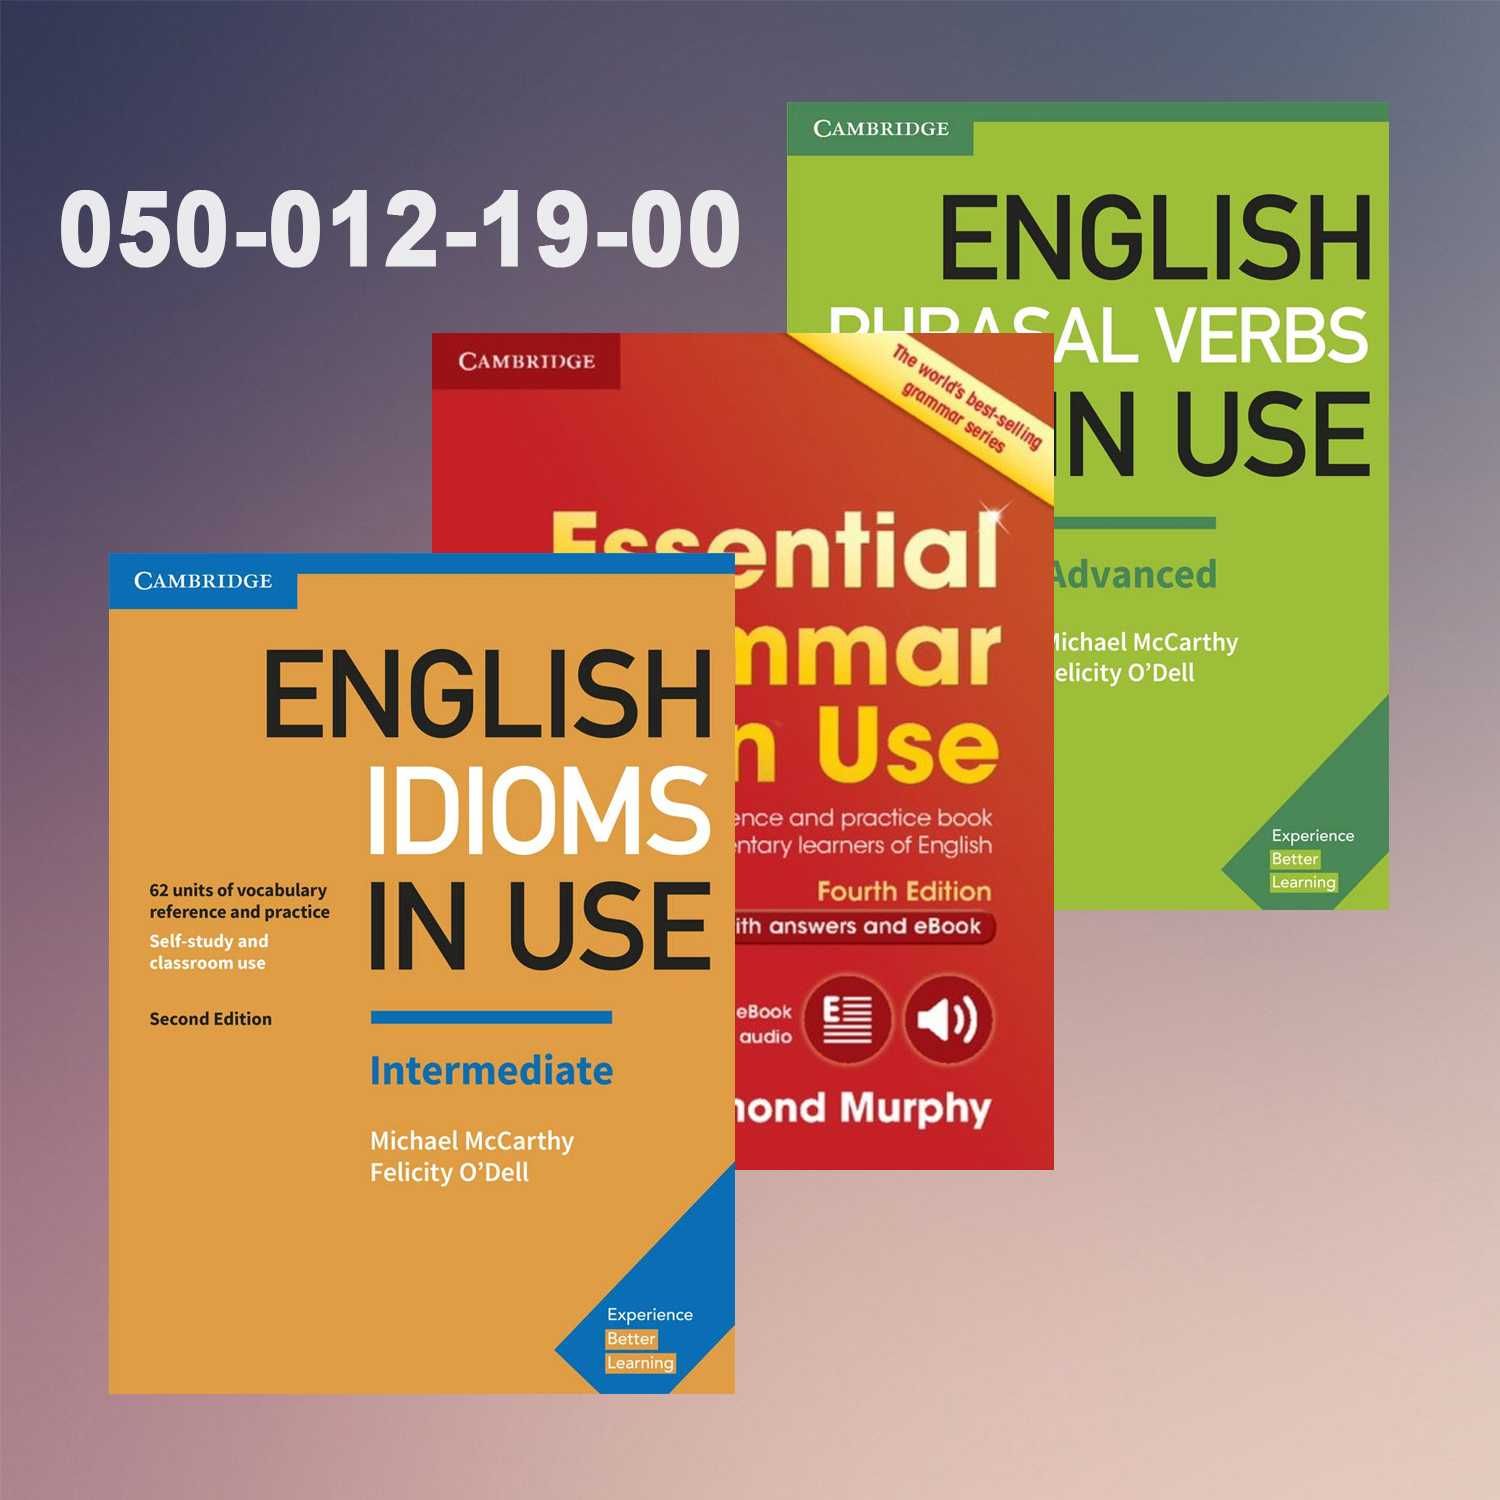 English - Idioms, Collocations, Phrasal Verbs, Vocabulary in Use